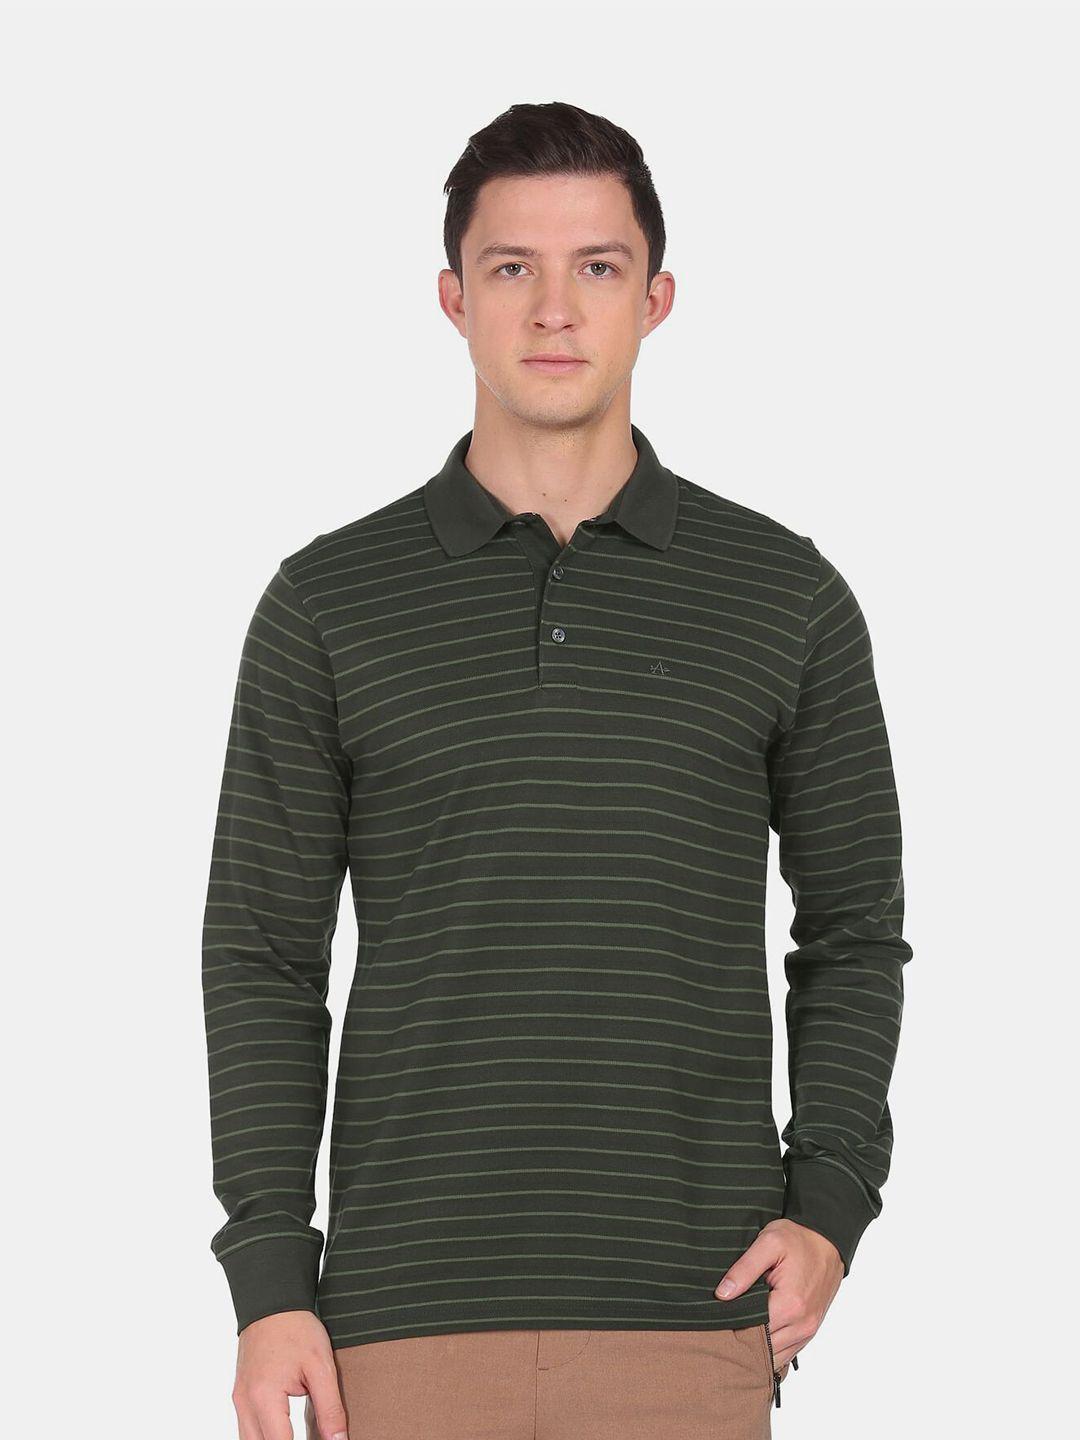 arrow men olive green striped polo collar cotton t-shirt